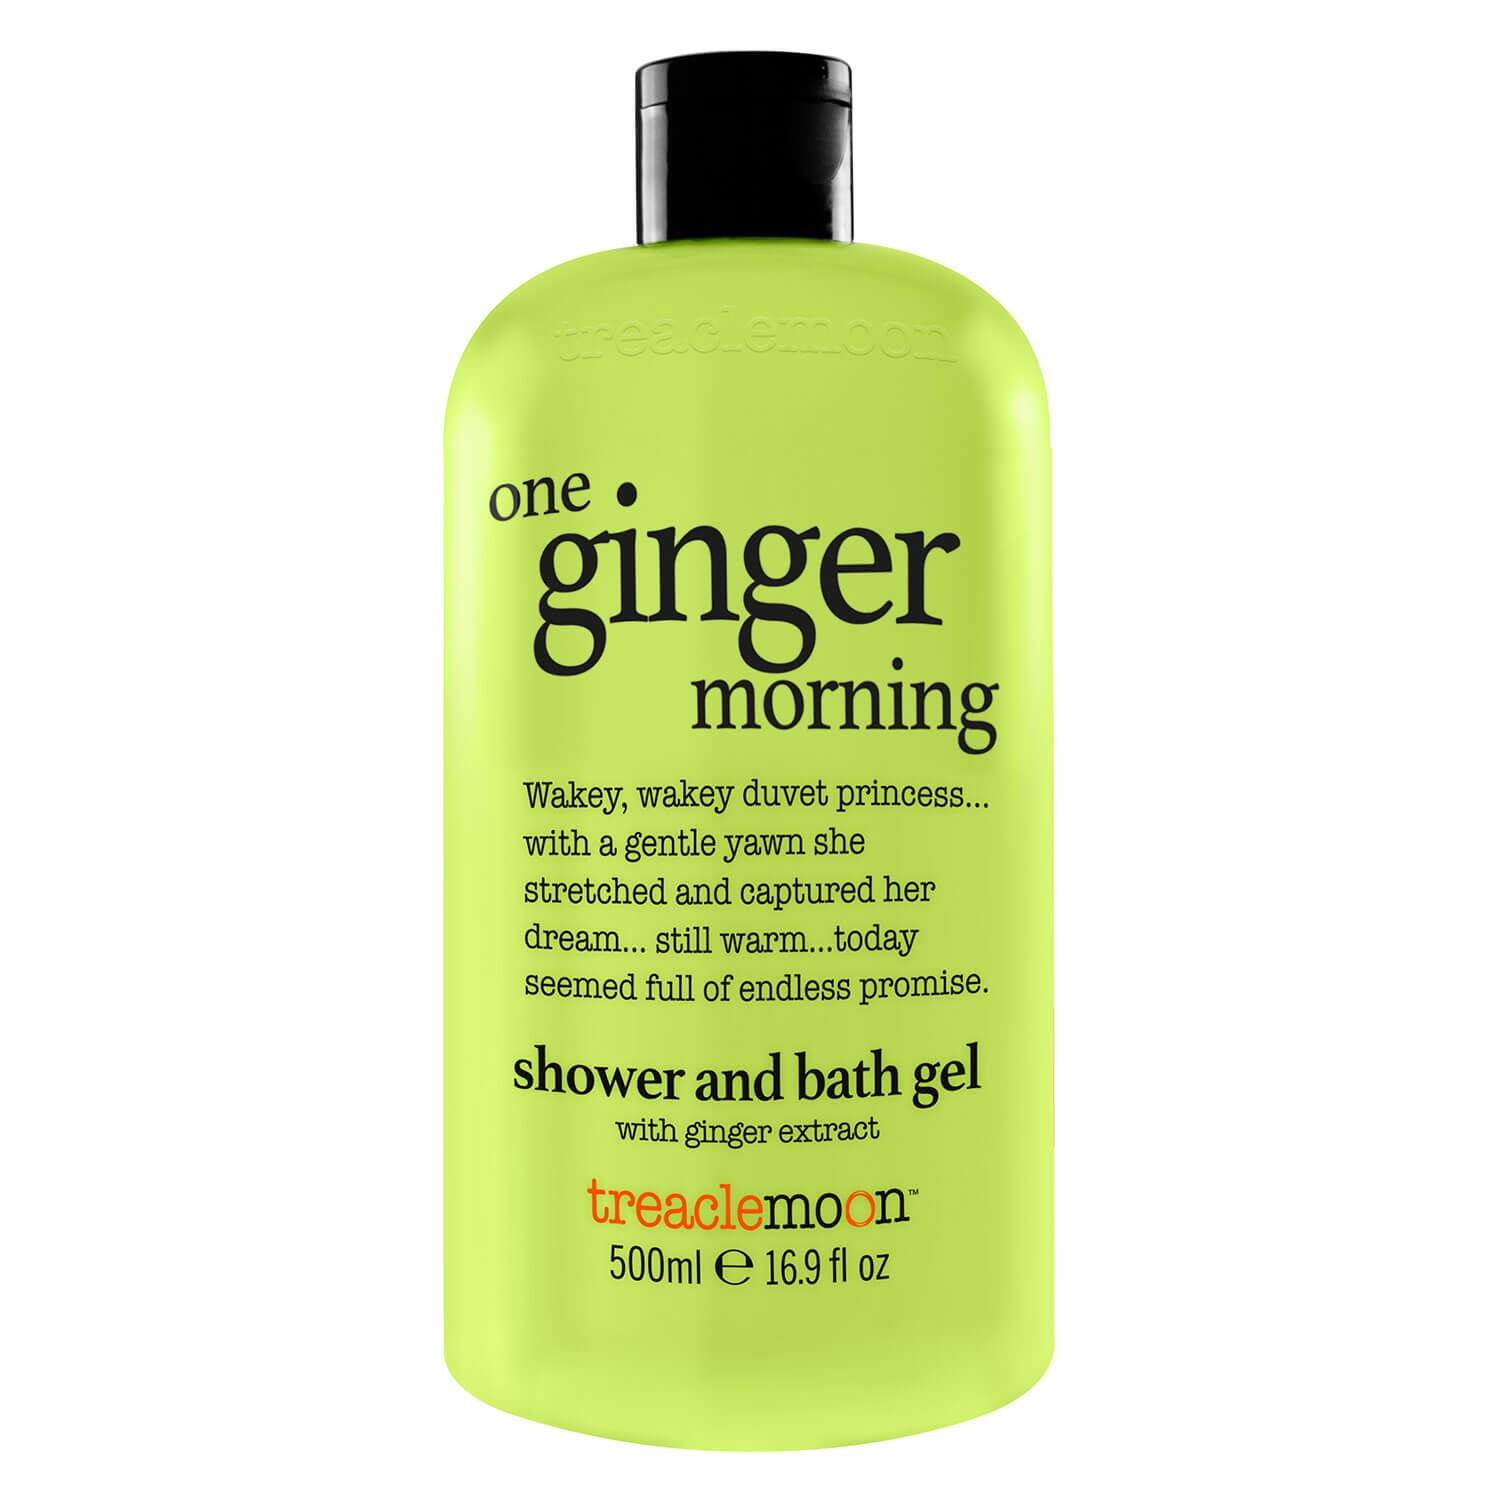 Produktbild von treaclemoon - one ginger morning shower and bath gel